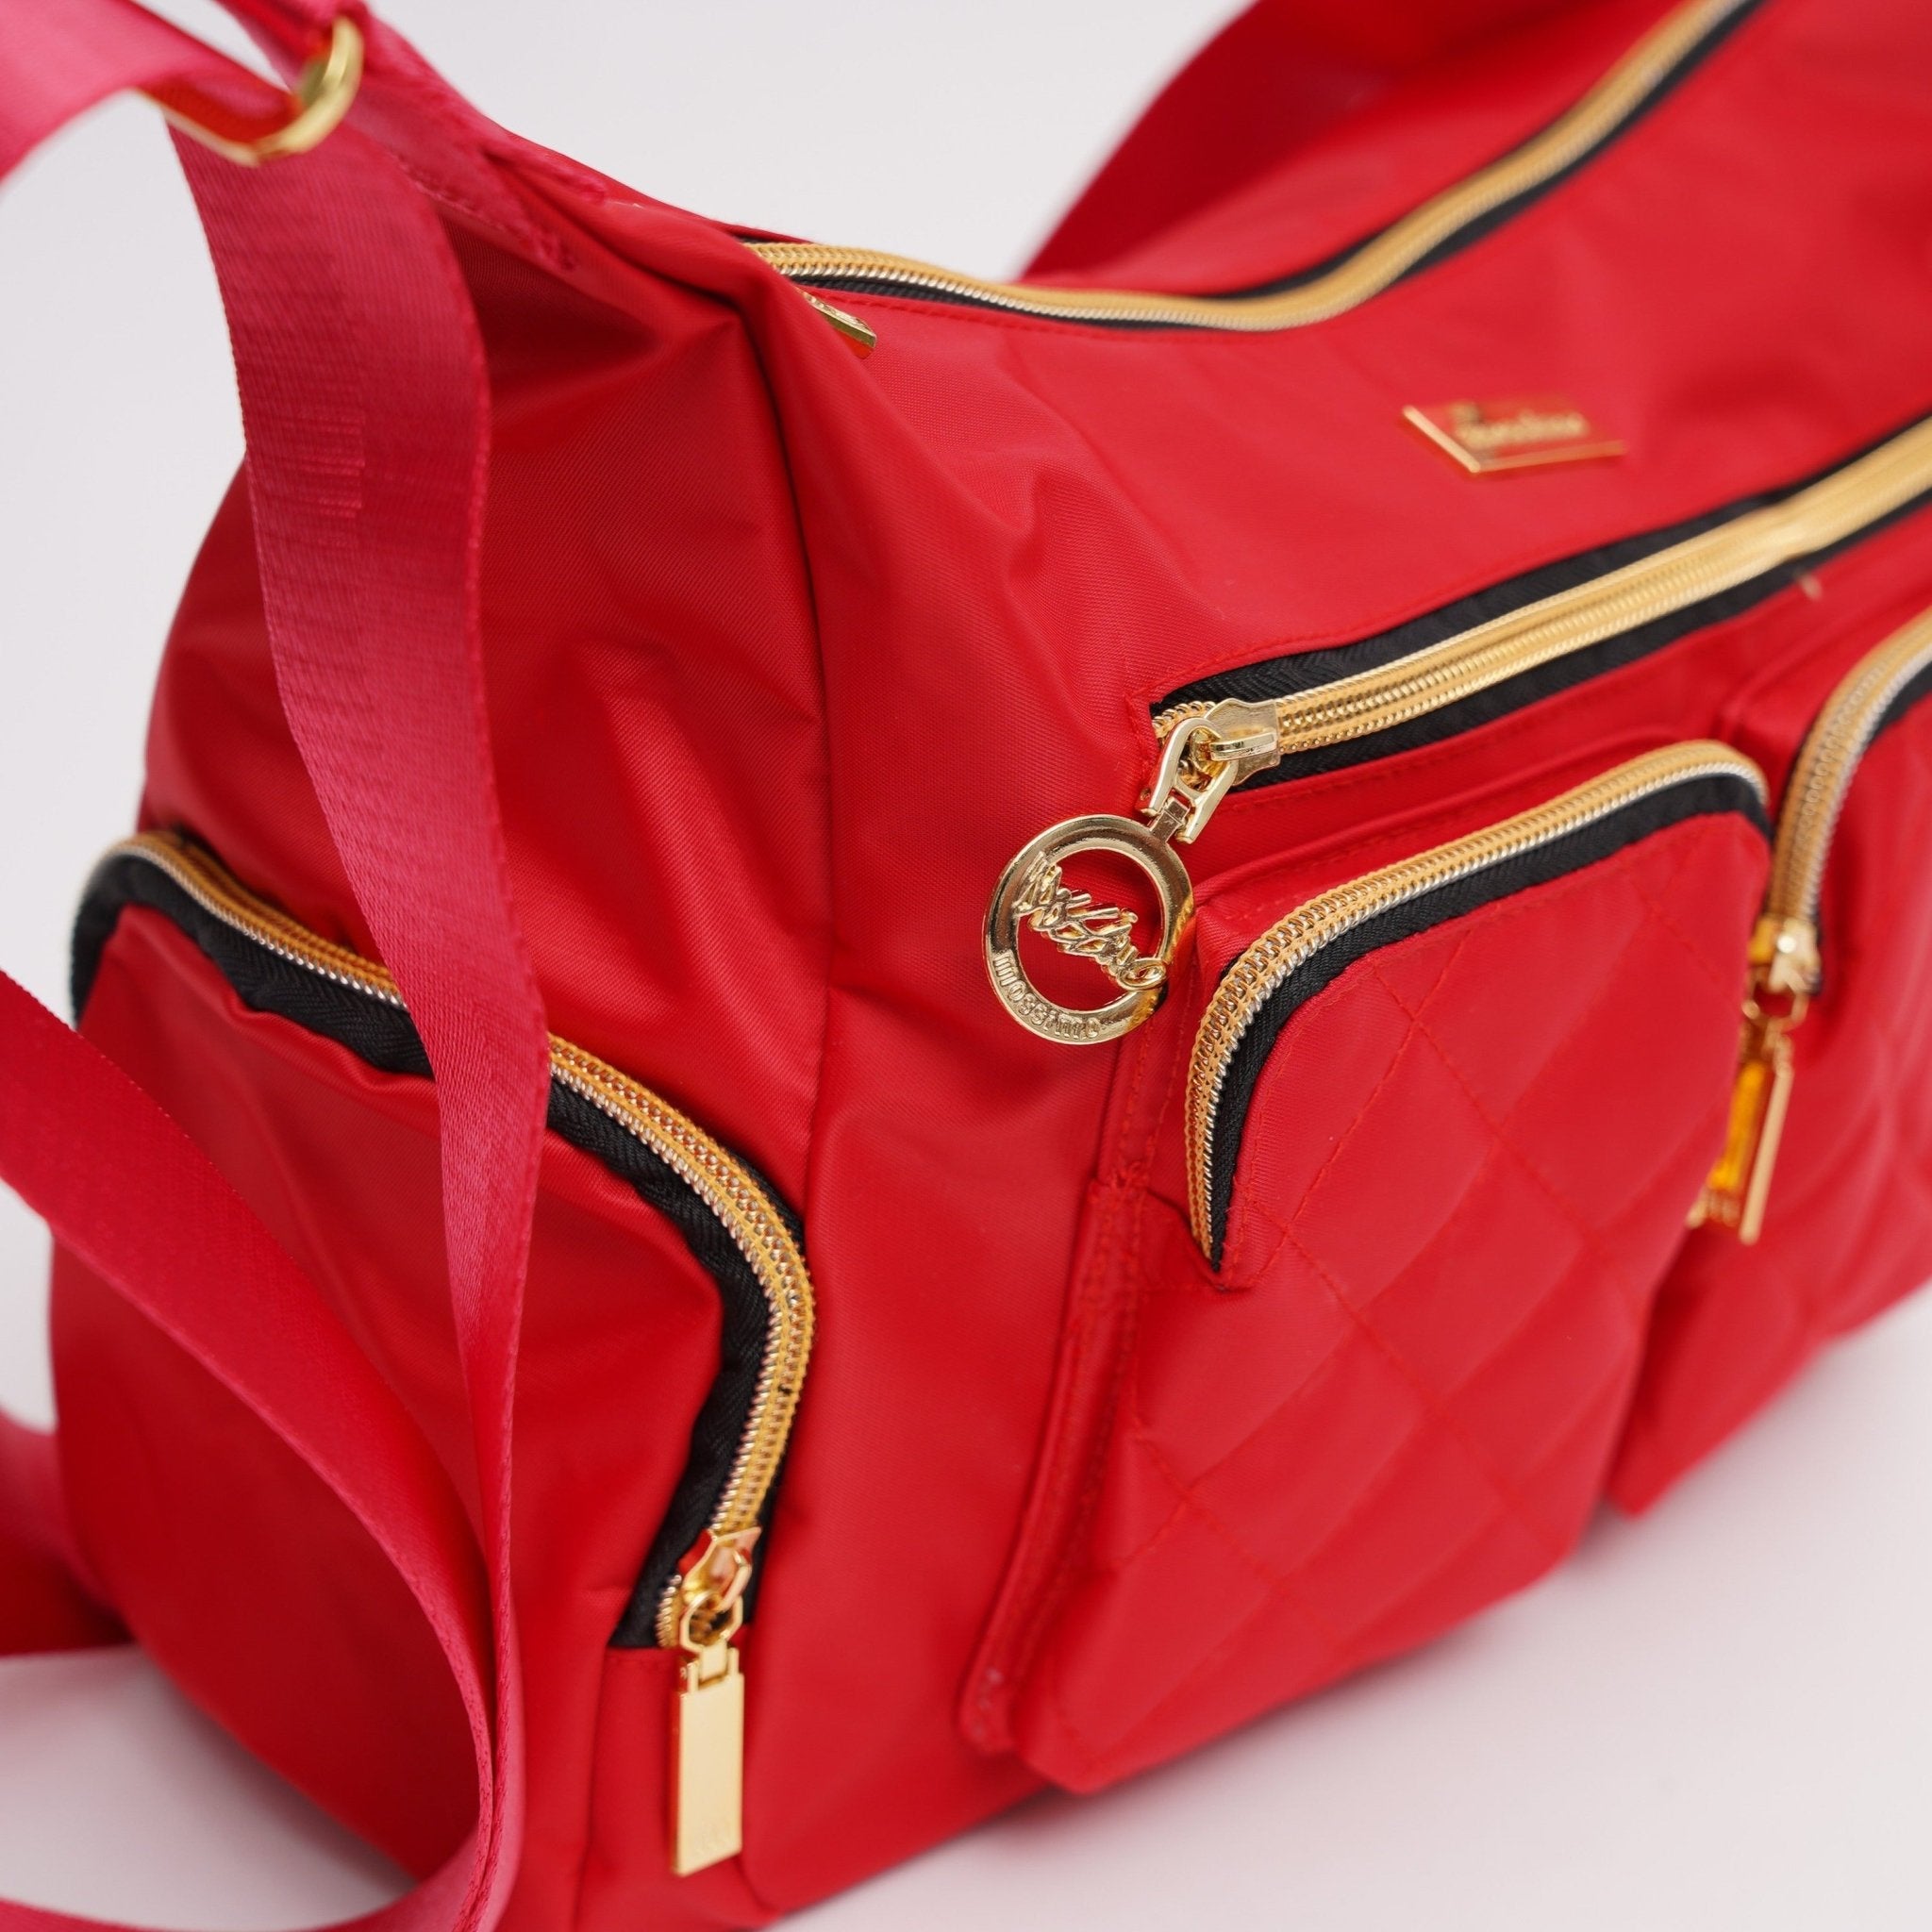 Red Shoulder Bag w/ 2 Pockets - Mossimo PH